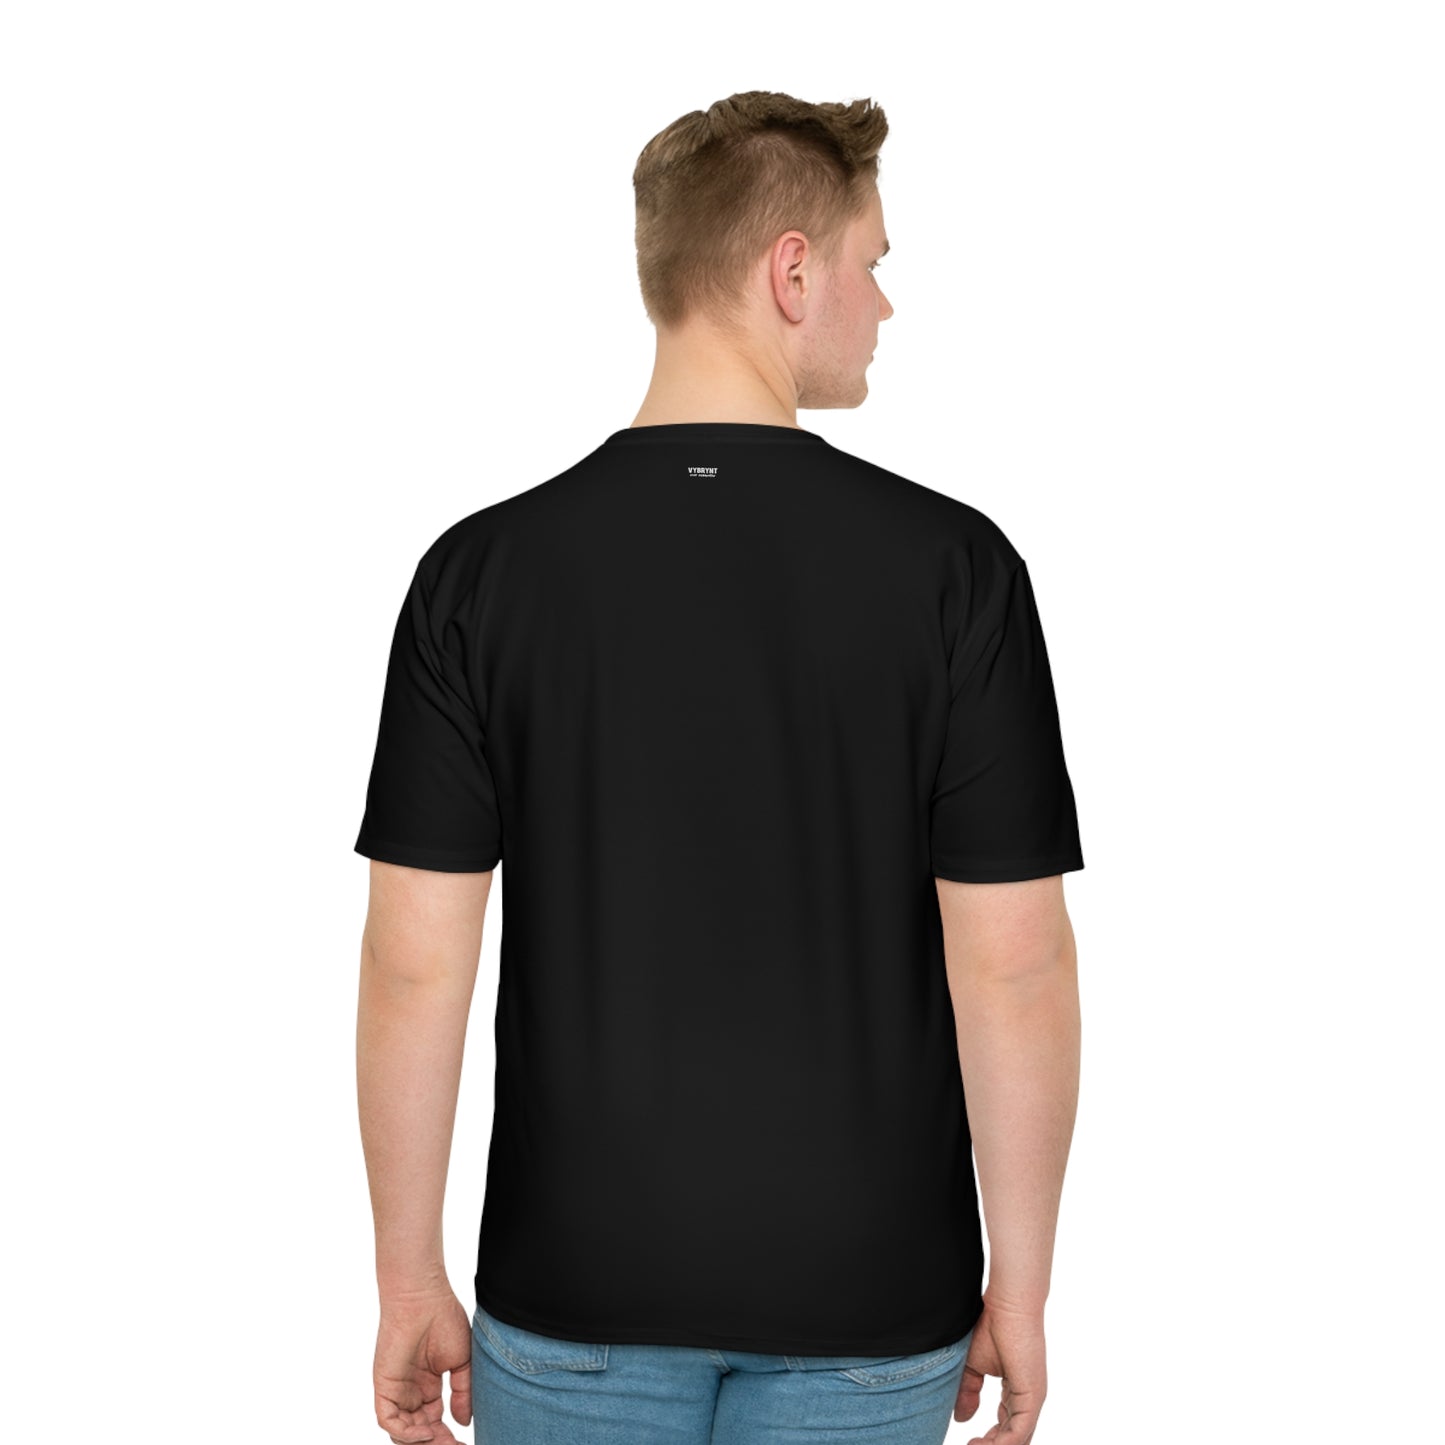 Lincoln Friendship Men's Black T-Shirt